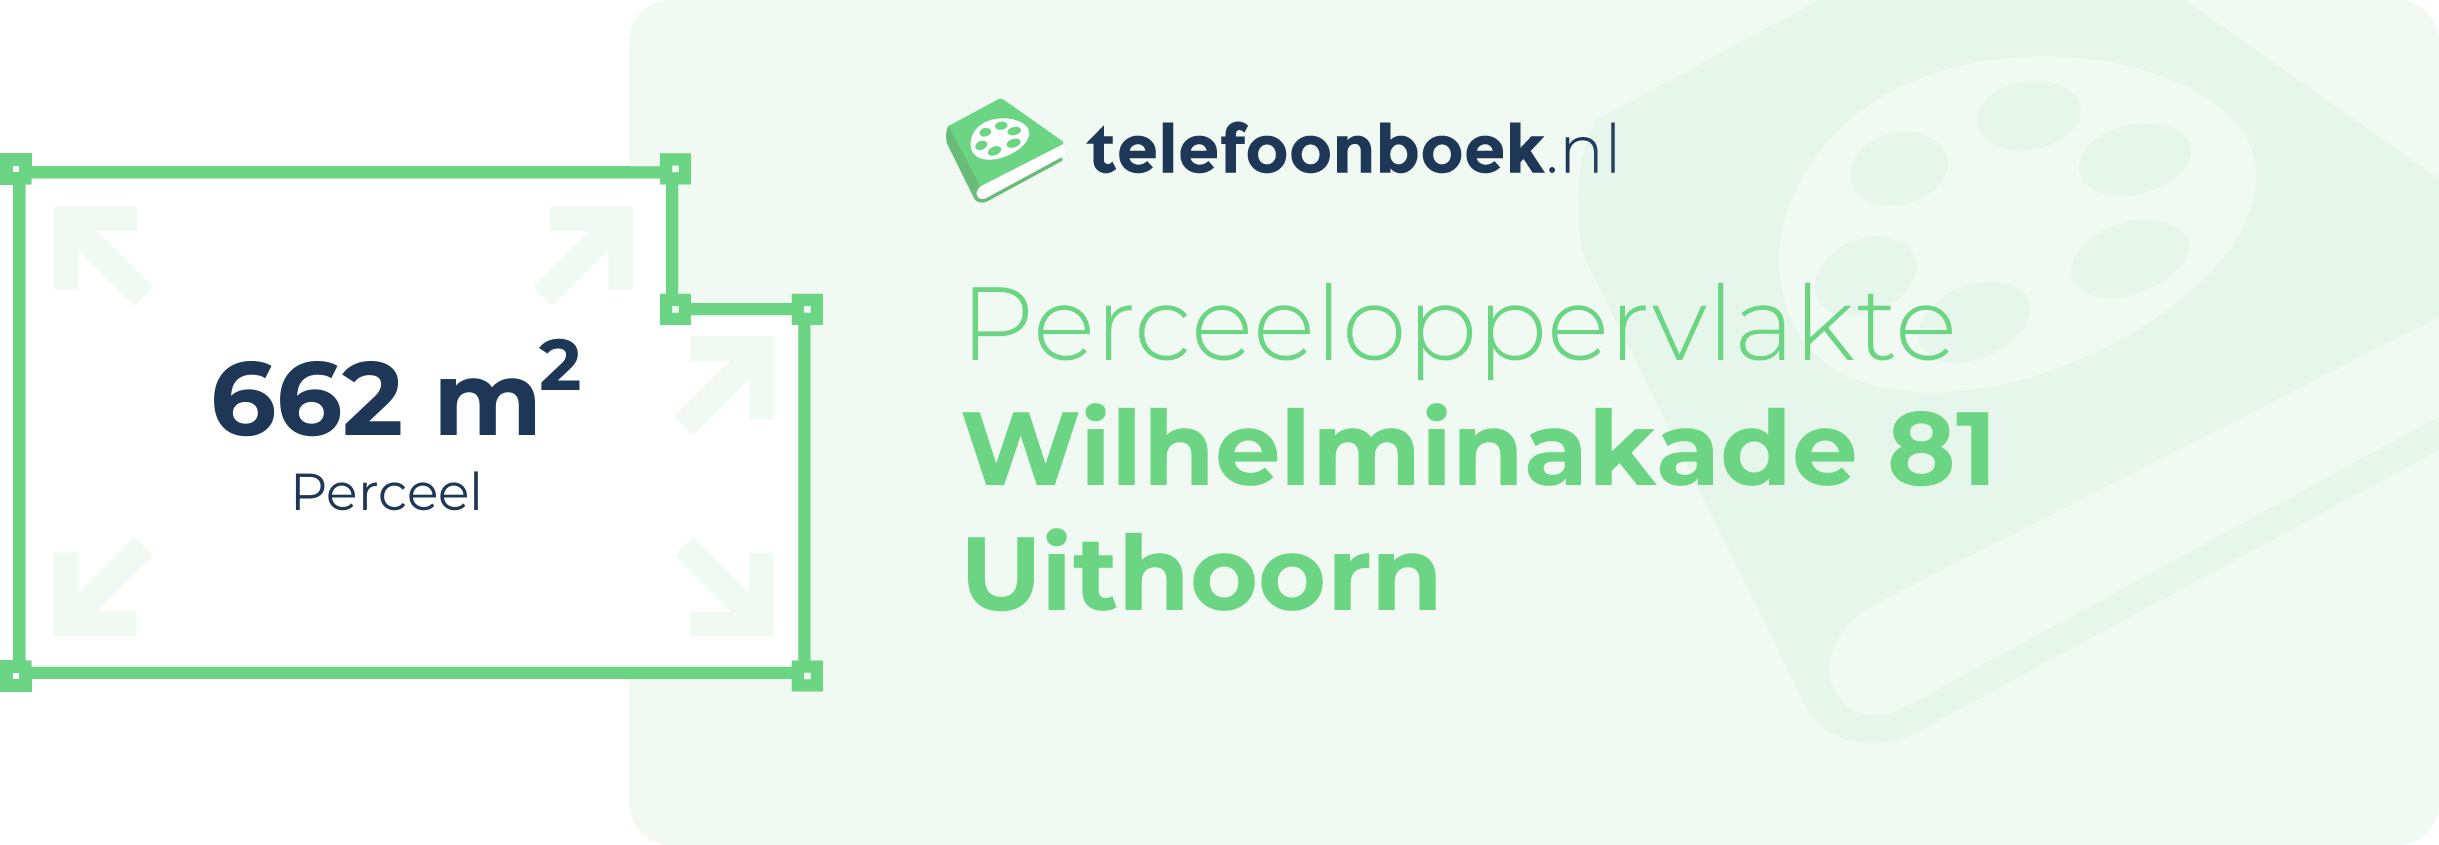 Perceeloppervlakte Wilhelminakade 81 Uithoorn